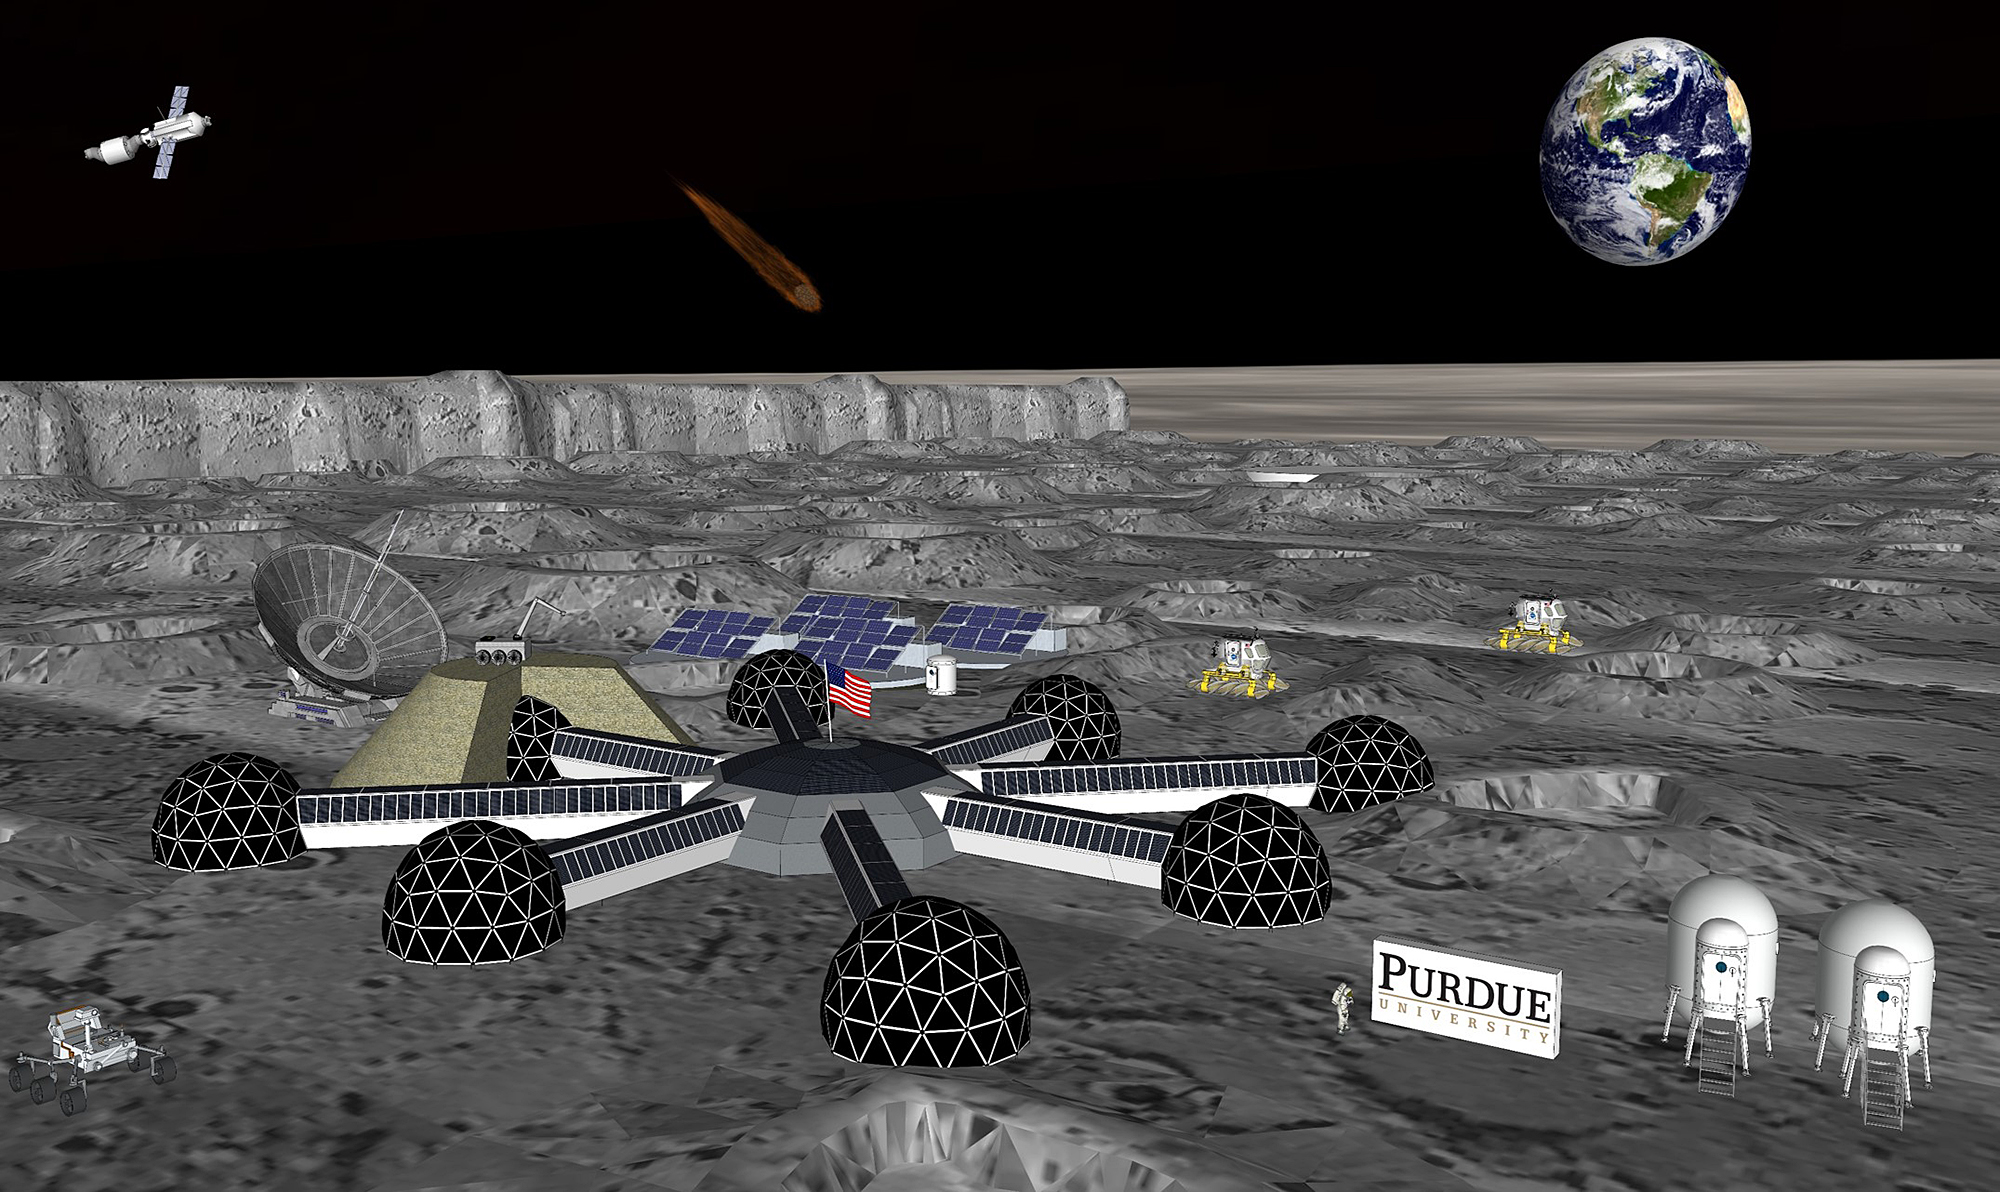 Artist's rendering of possible future habitat on the moon or Mars